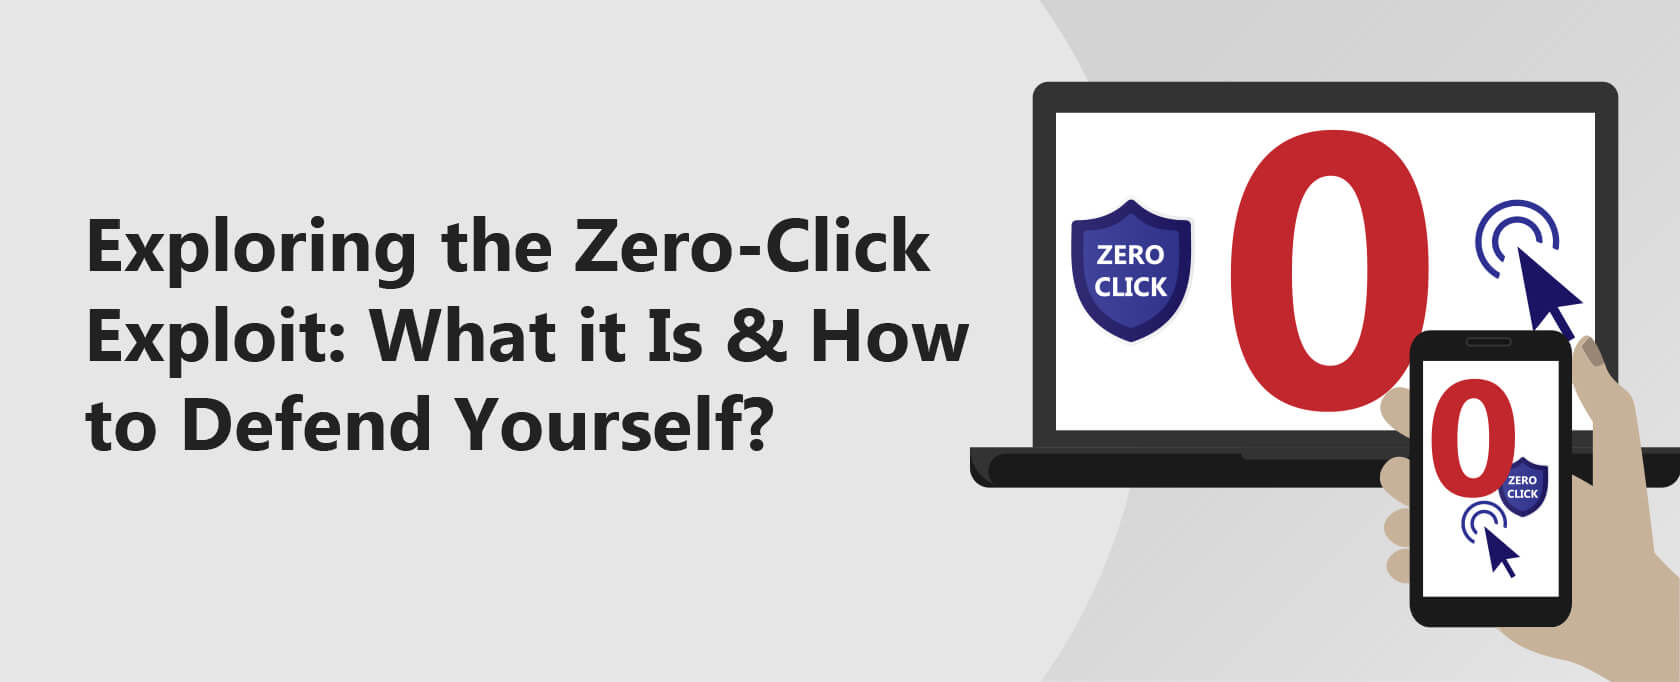 Exploring the Zero-Click Exploit